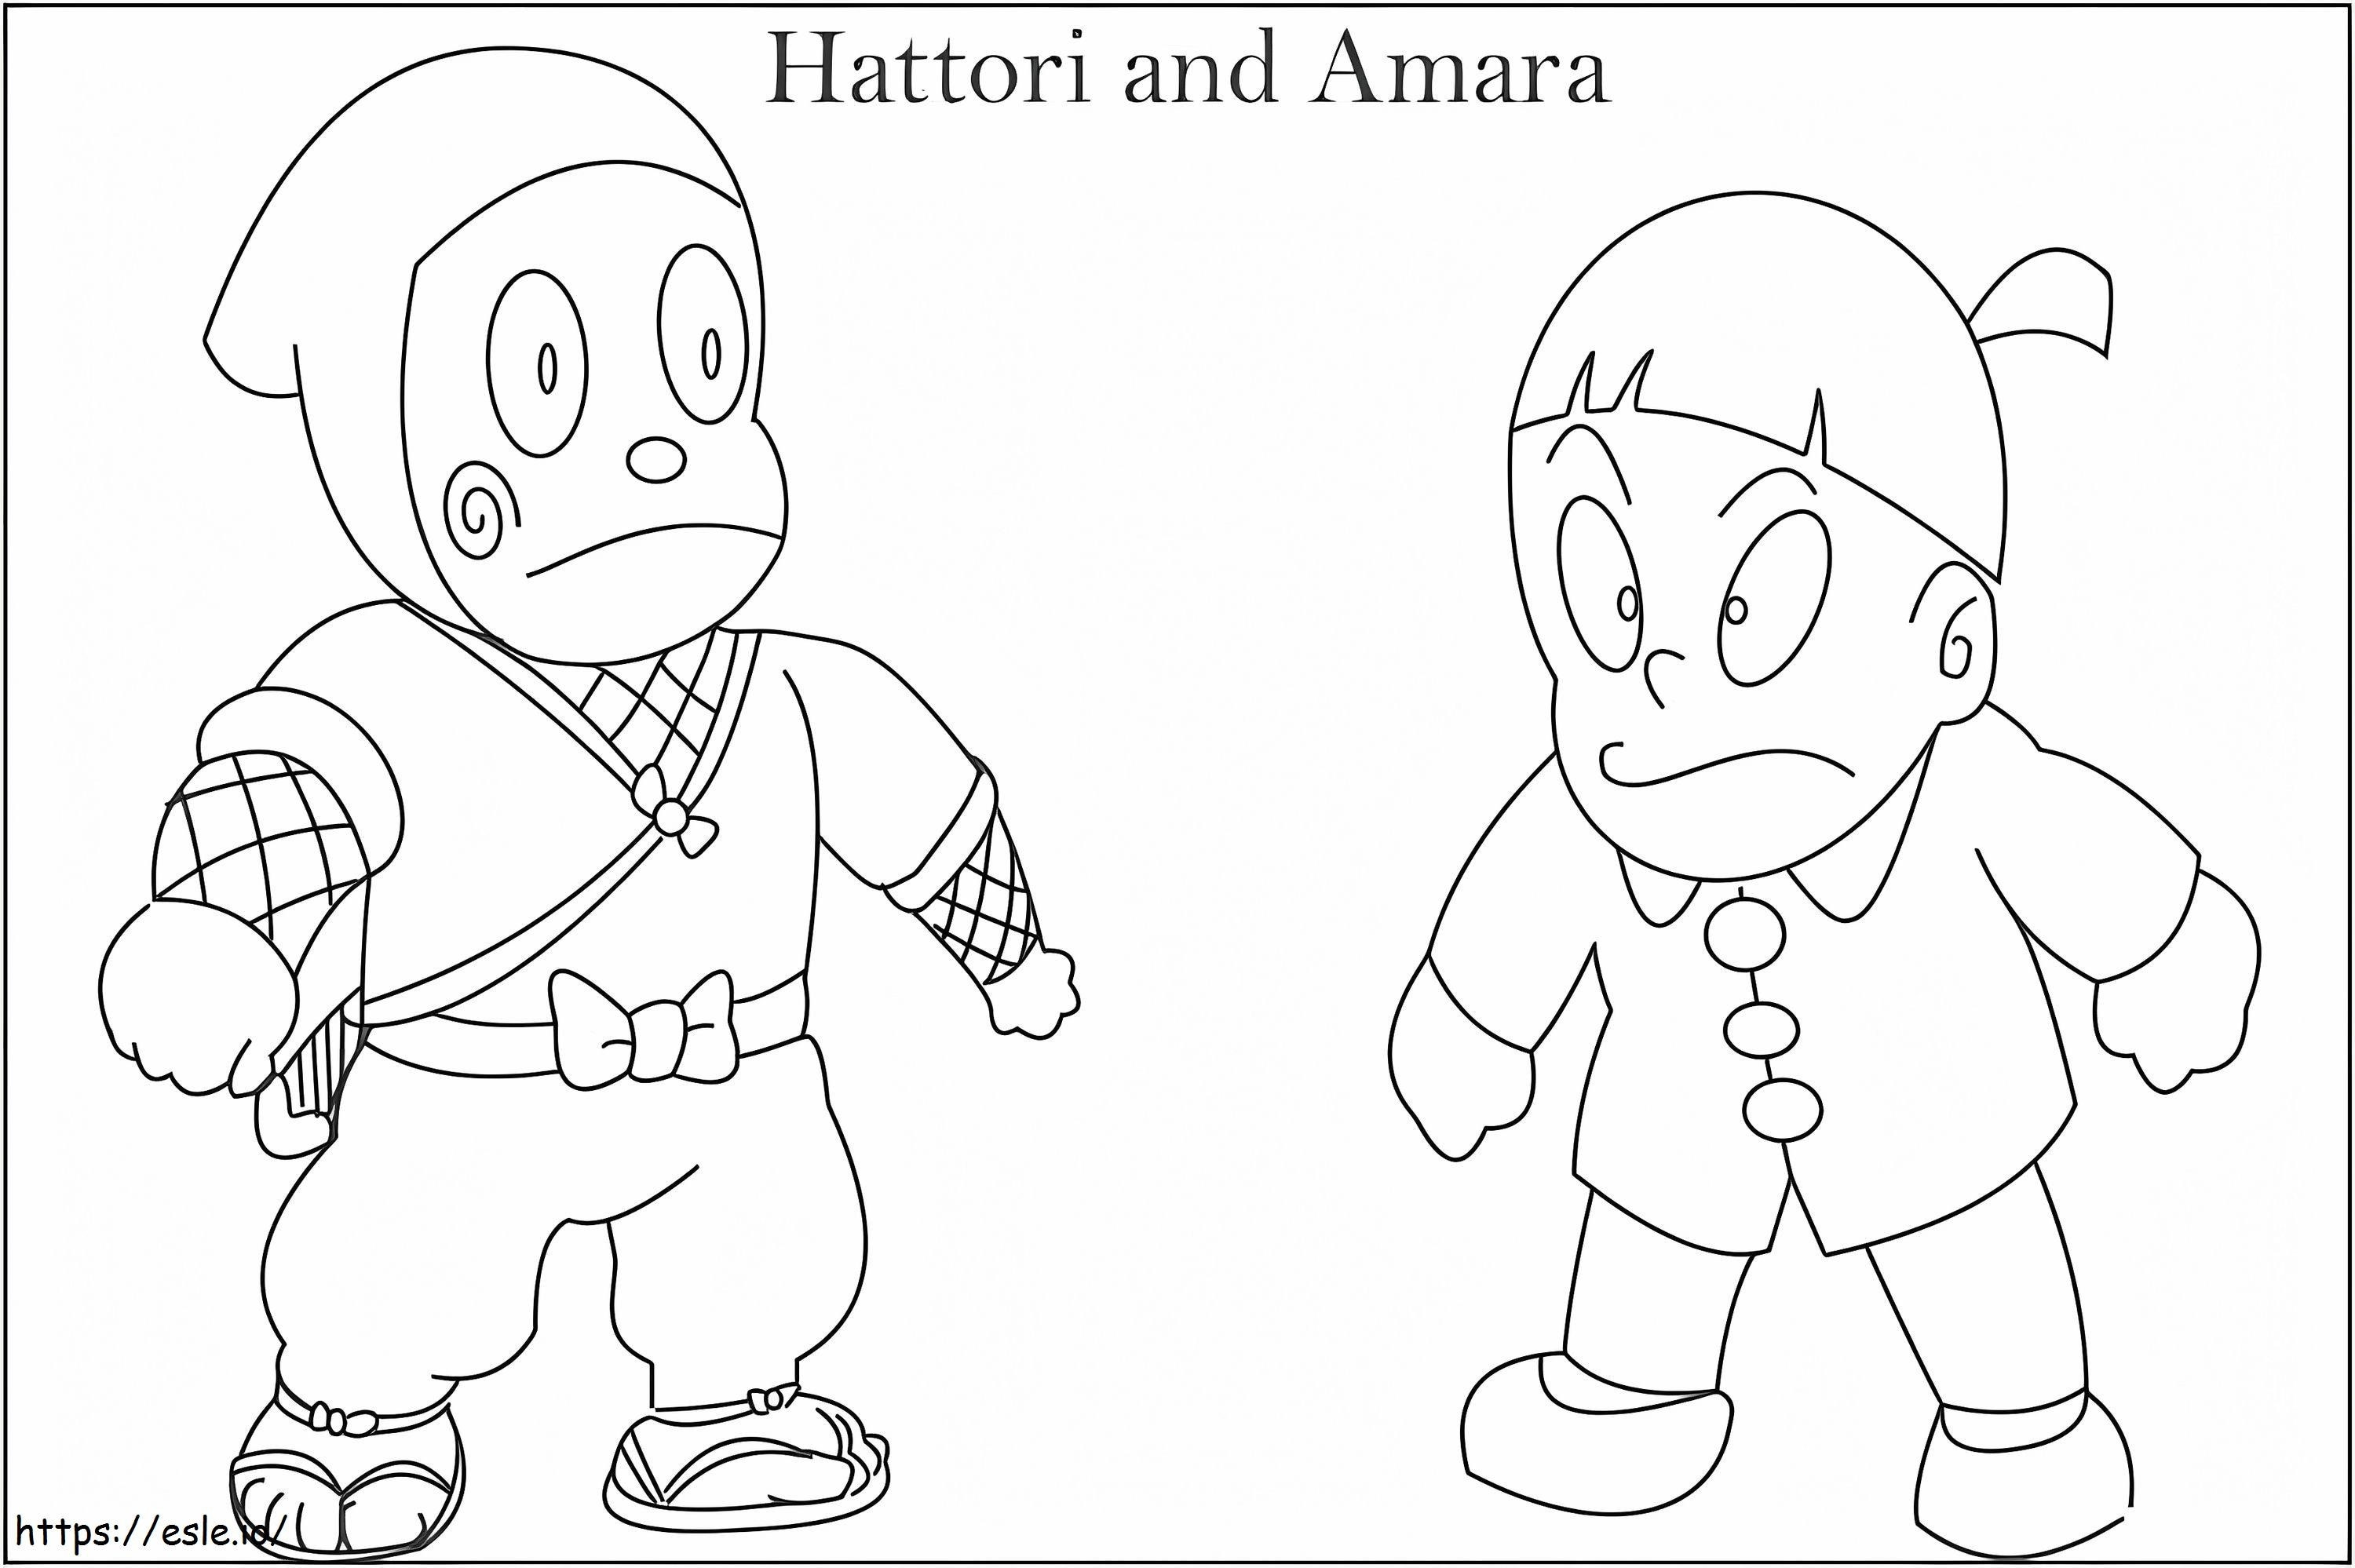 Hattori And Amara coloring page